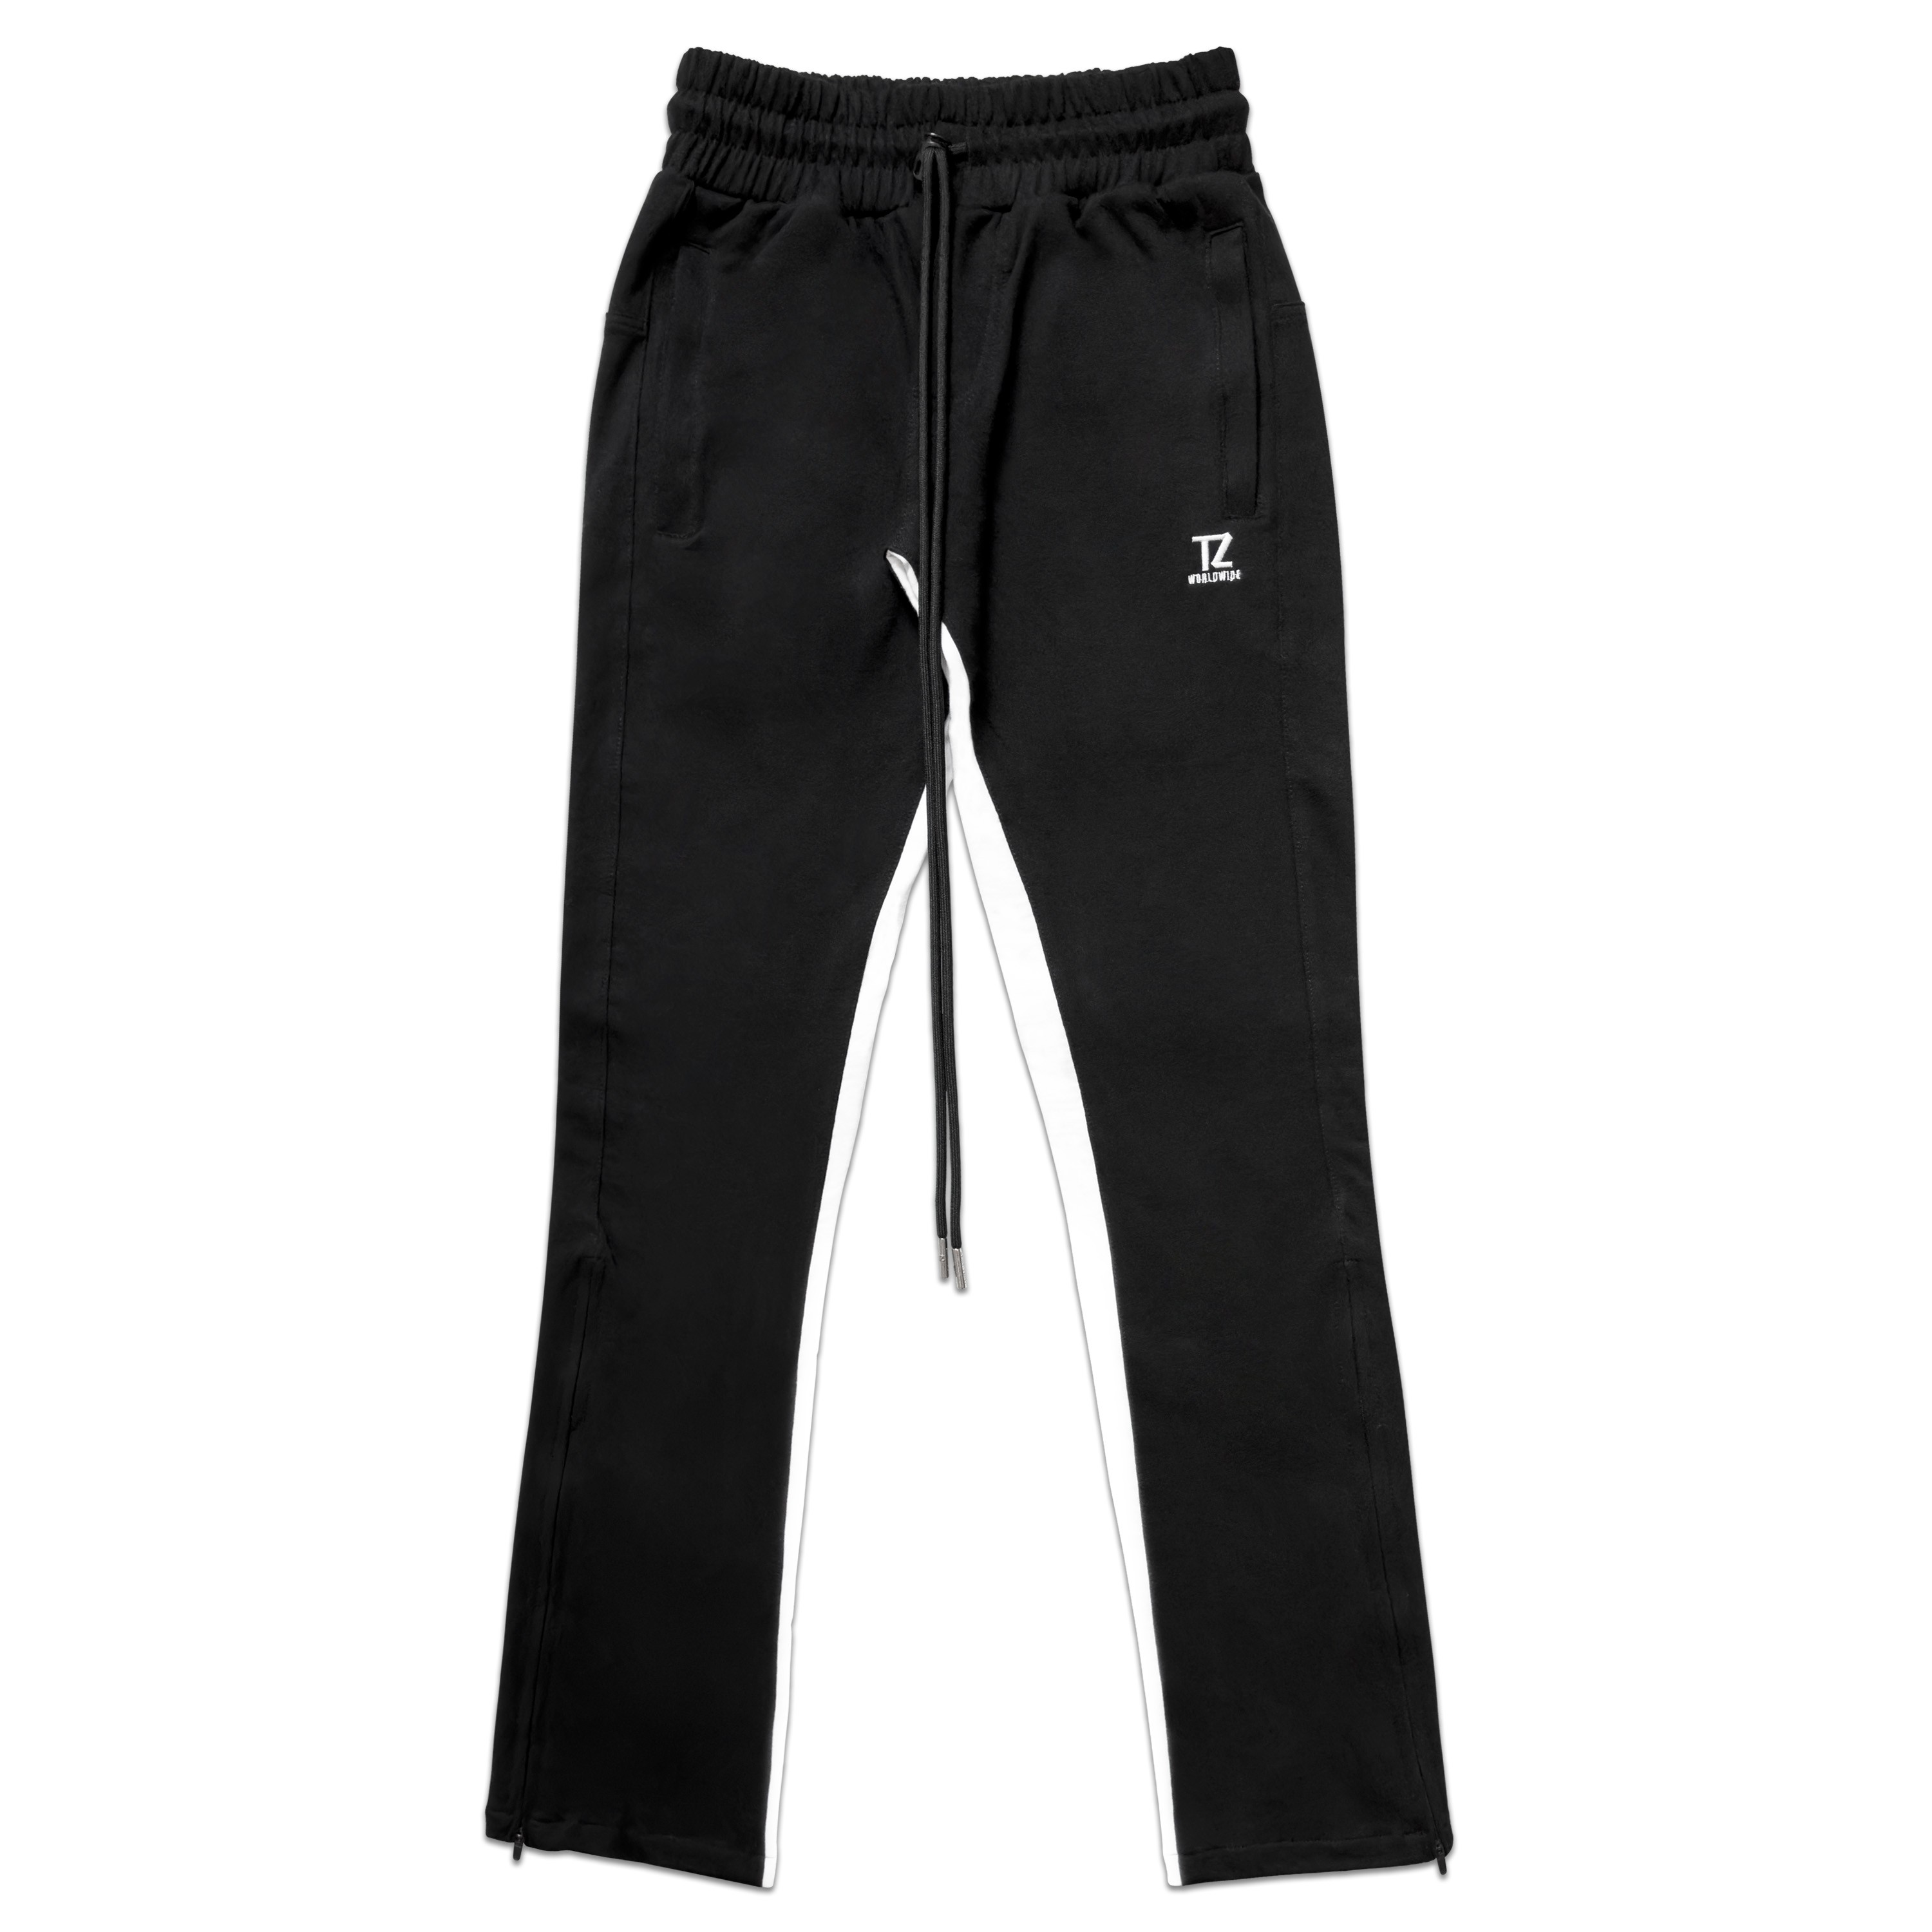 TZ Sweater Pants (Slim Fit Bootcut) Size S